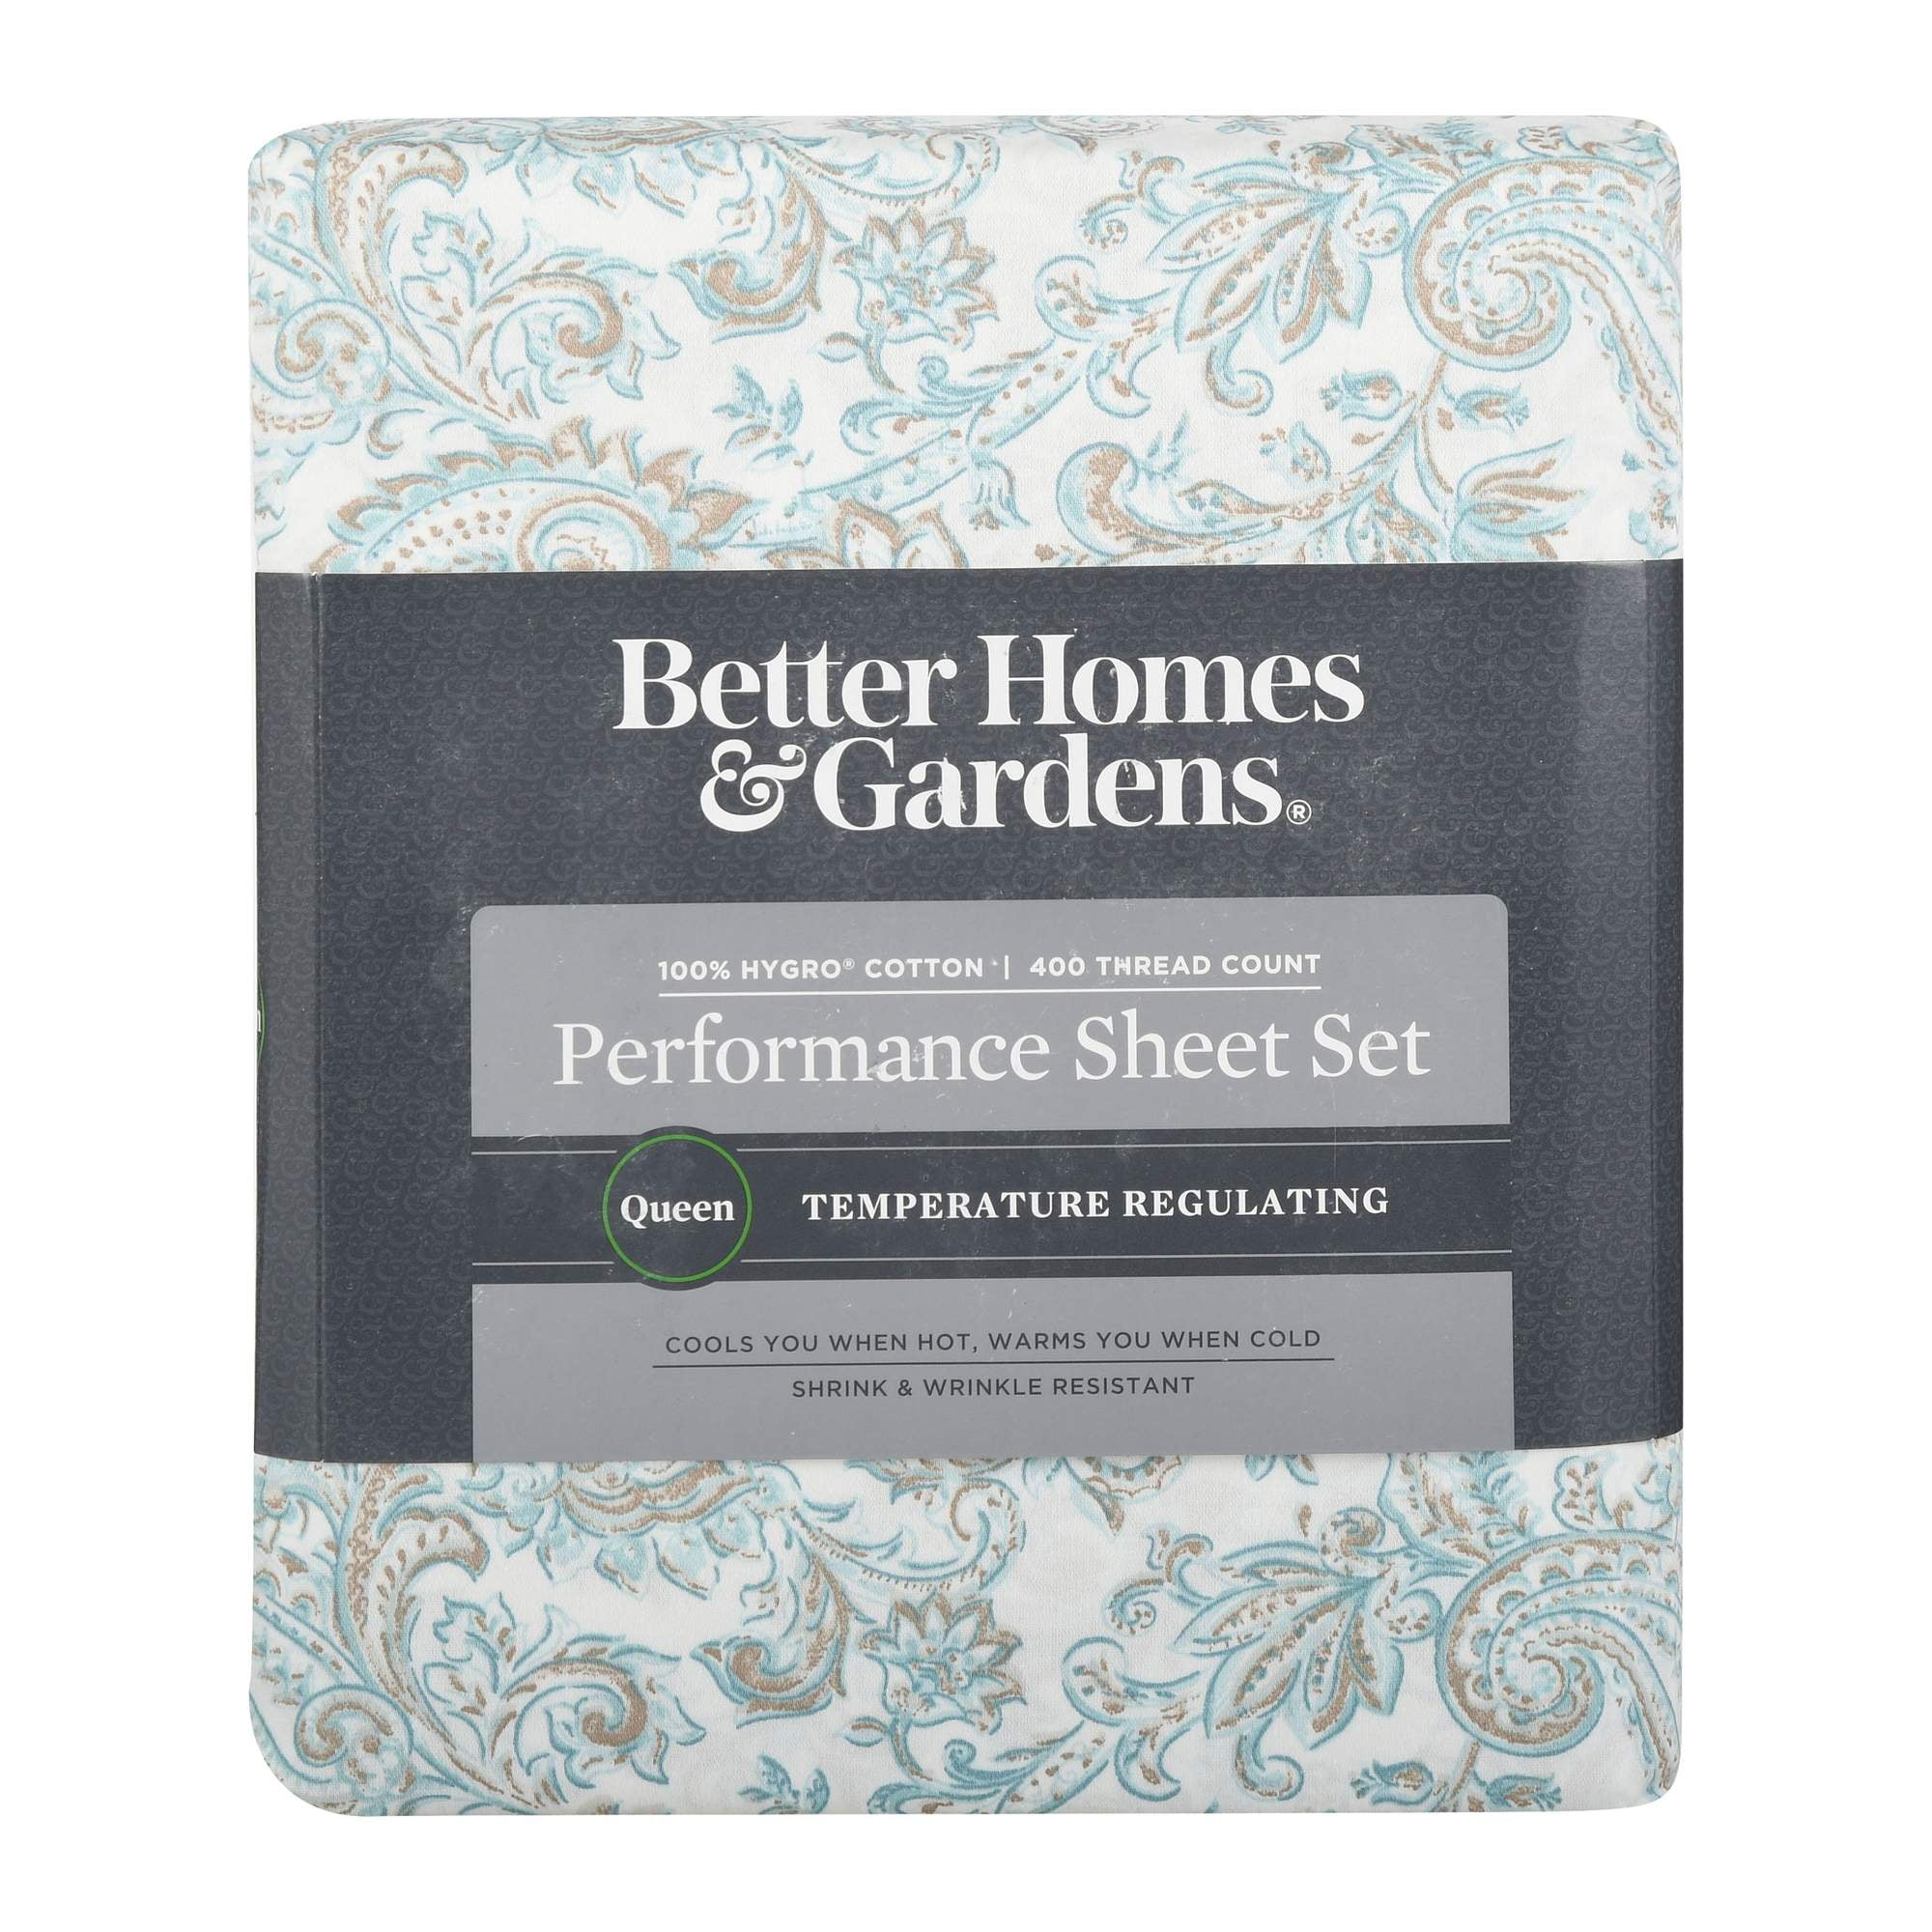 Better Homes & Gardens 400 Thread Count Hygro Cotton Bed Sheet Set, Queen, Aqua Paisley